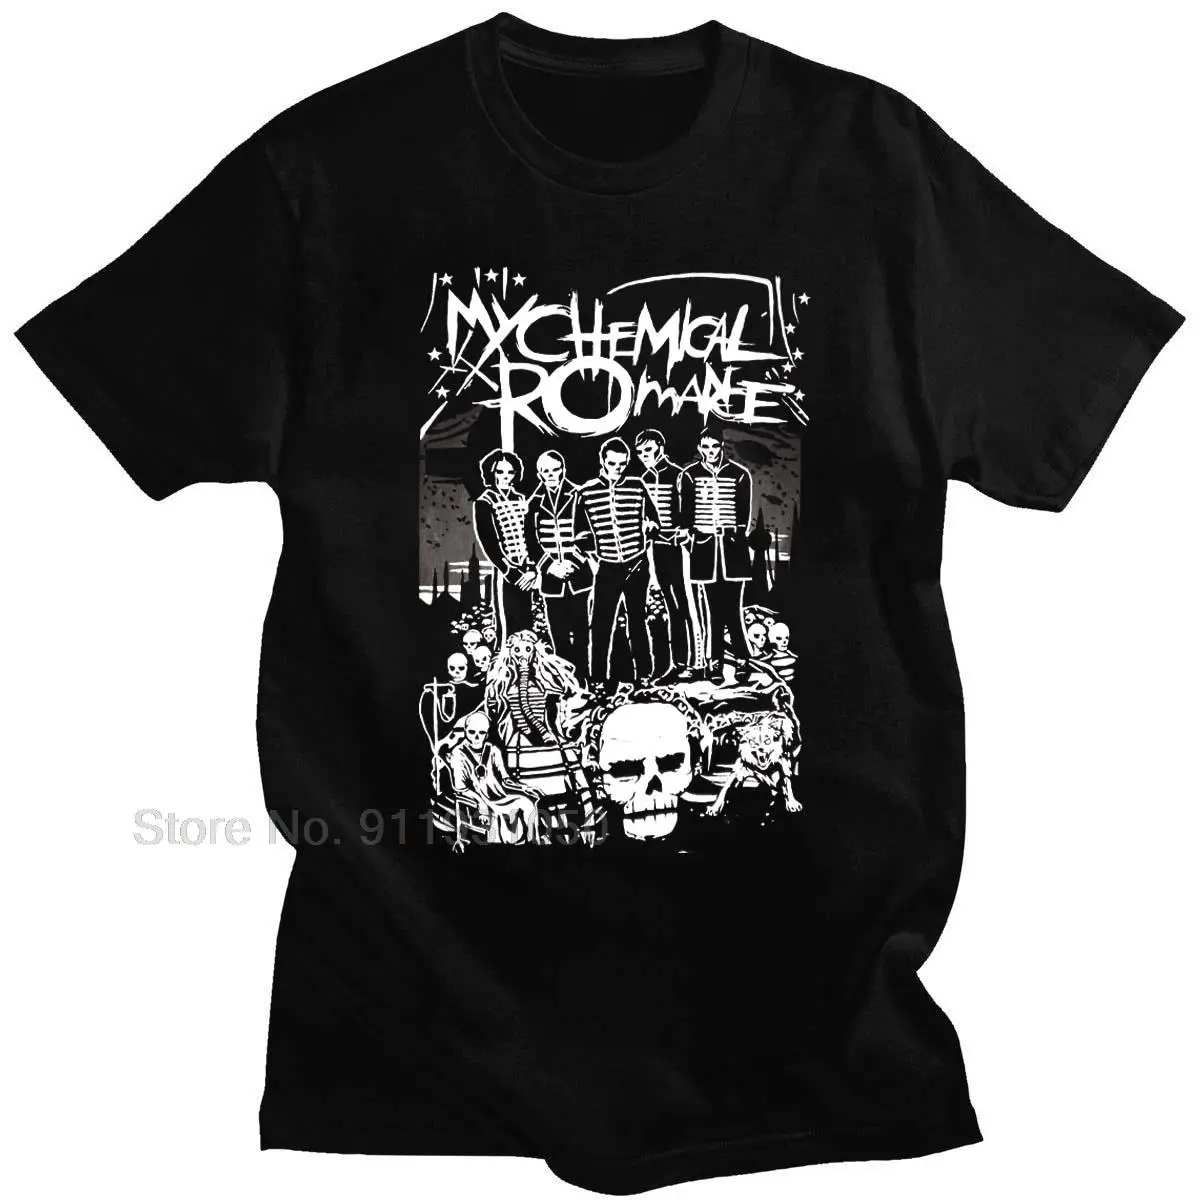 14 Color My Chemical Romance Mcr Dead New T-Shirt Black Parade Punk Emo Rock Summer T Shirt New 2021 Summer Fashion Top Tee EU